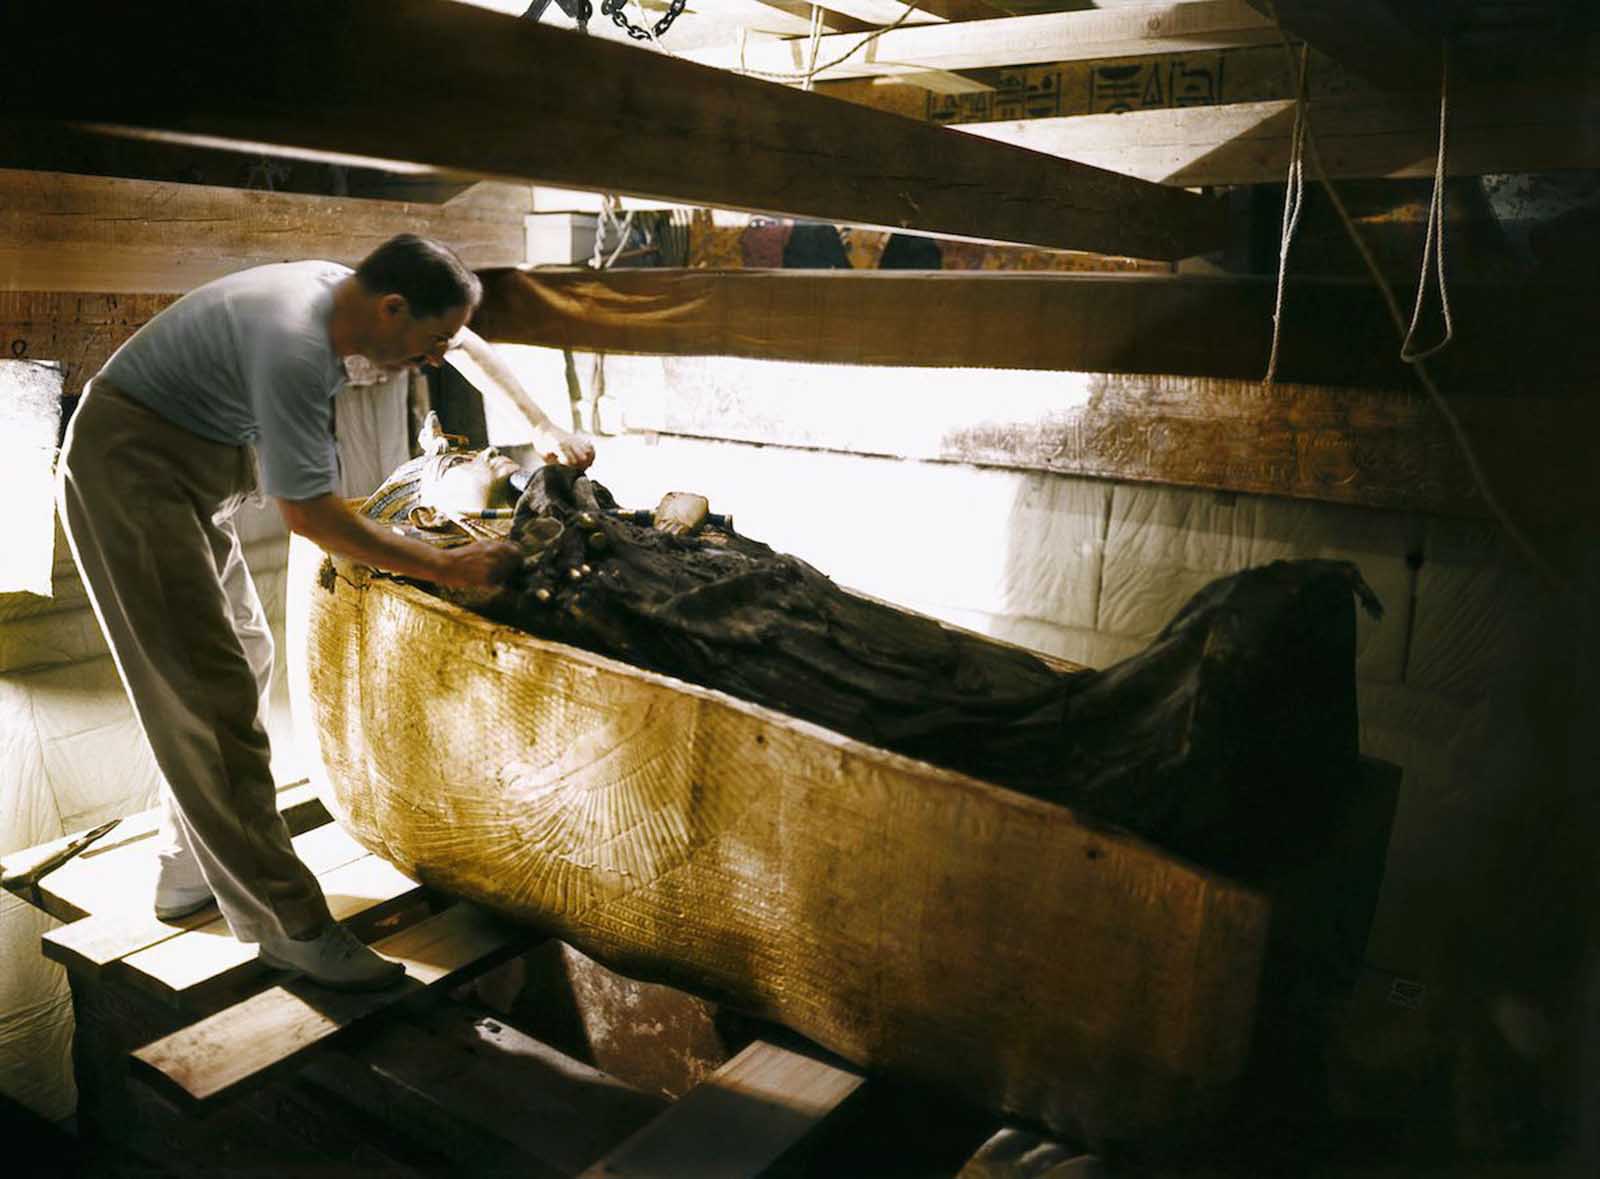 Carter examines Tutankhamun's sarcophagus.